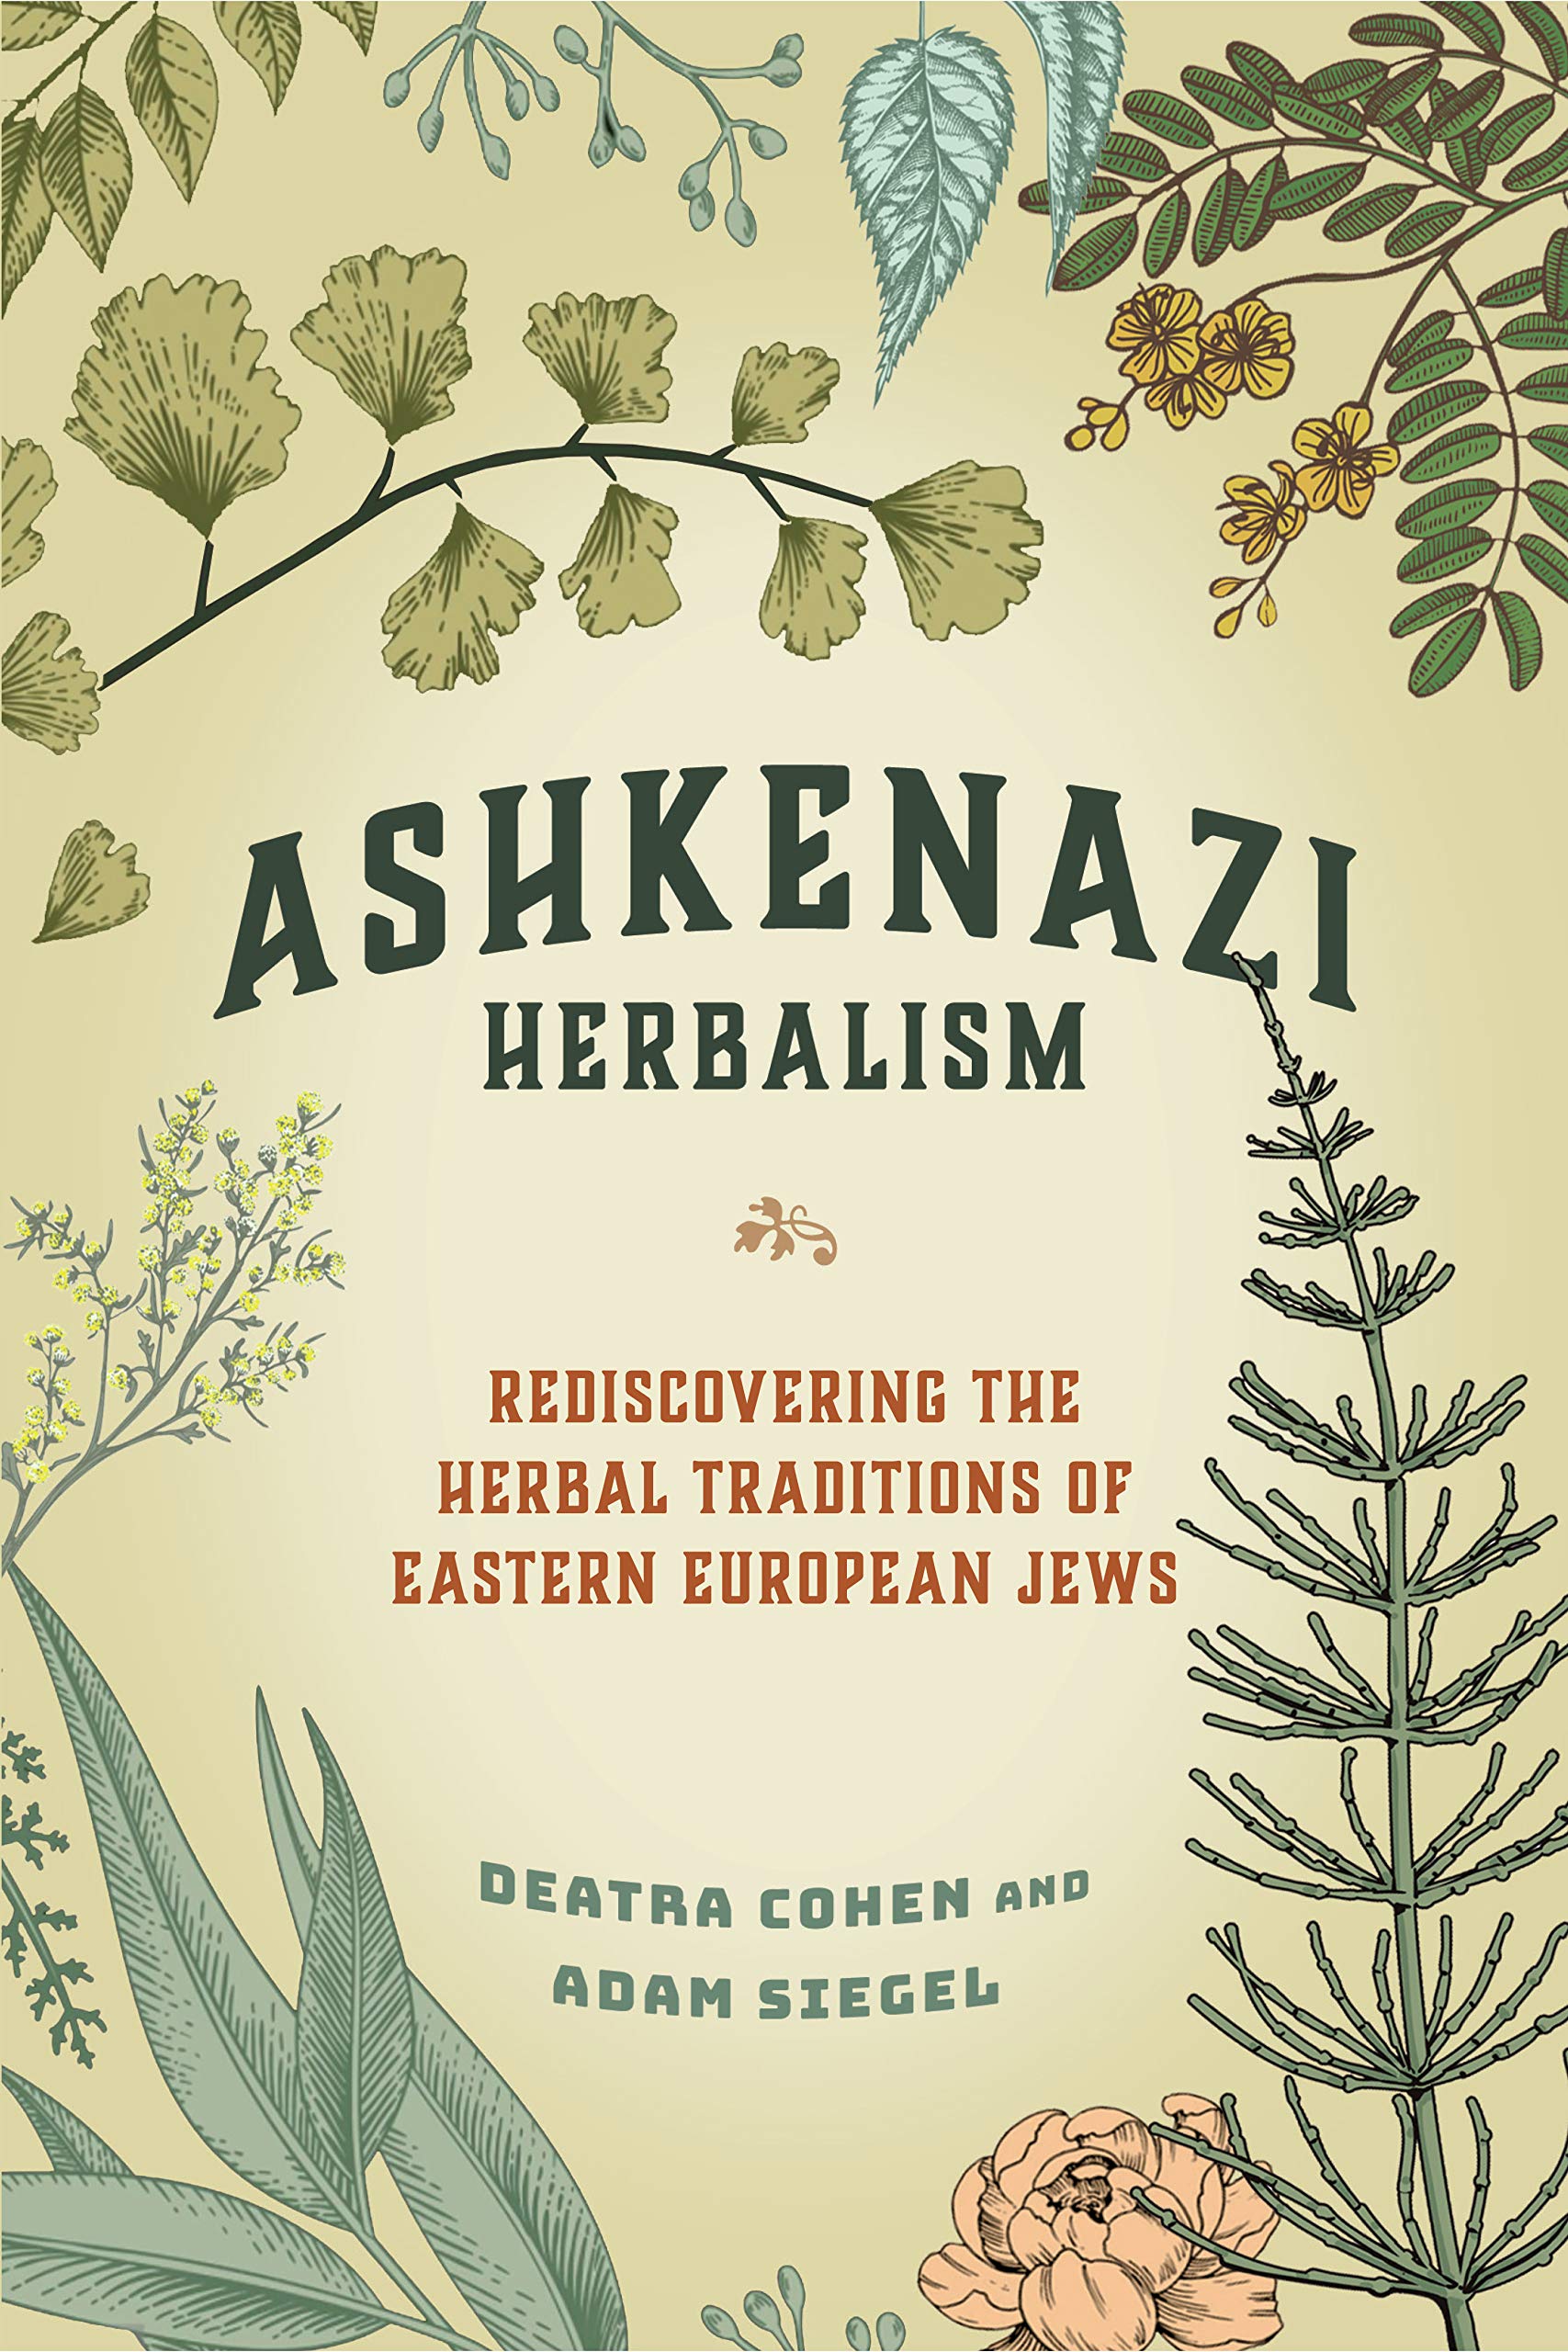 Ashkenazi Herbalism: Rediscovering the Herbal Traditions of Eastern European Jews (Deatra Cohen, Adam Siegel)